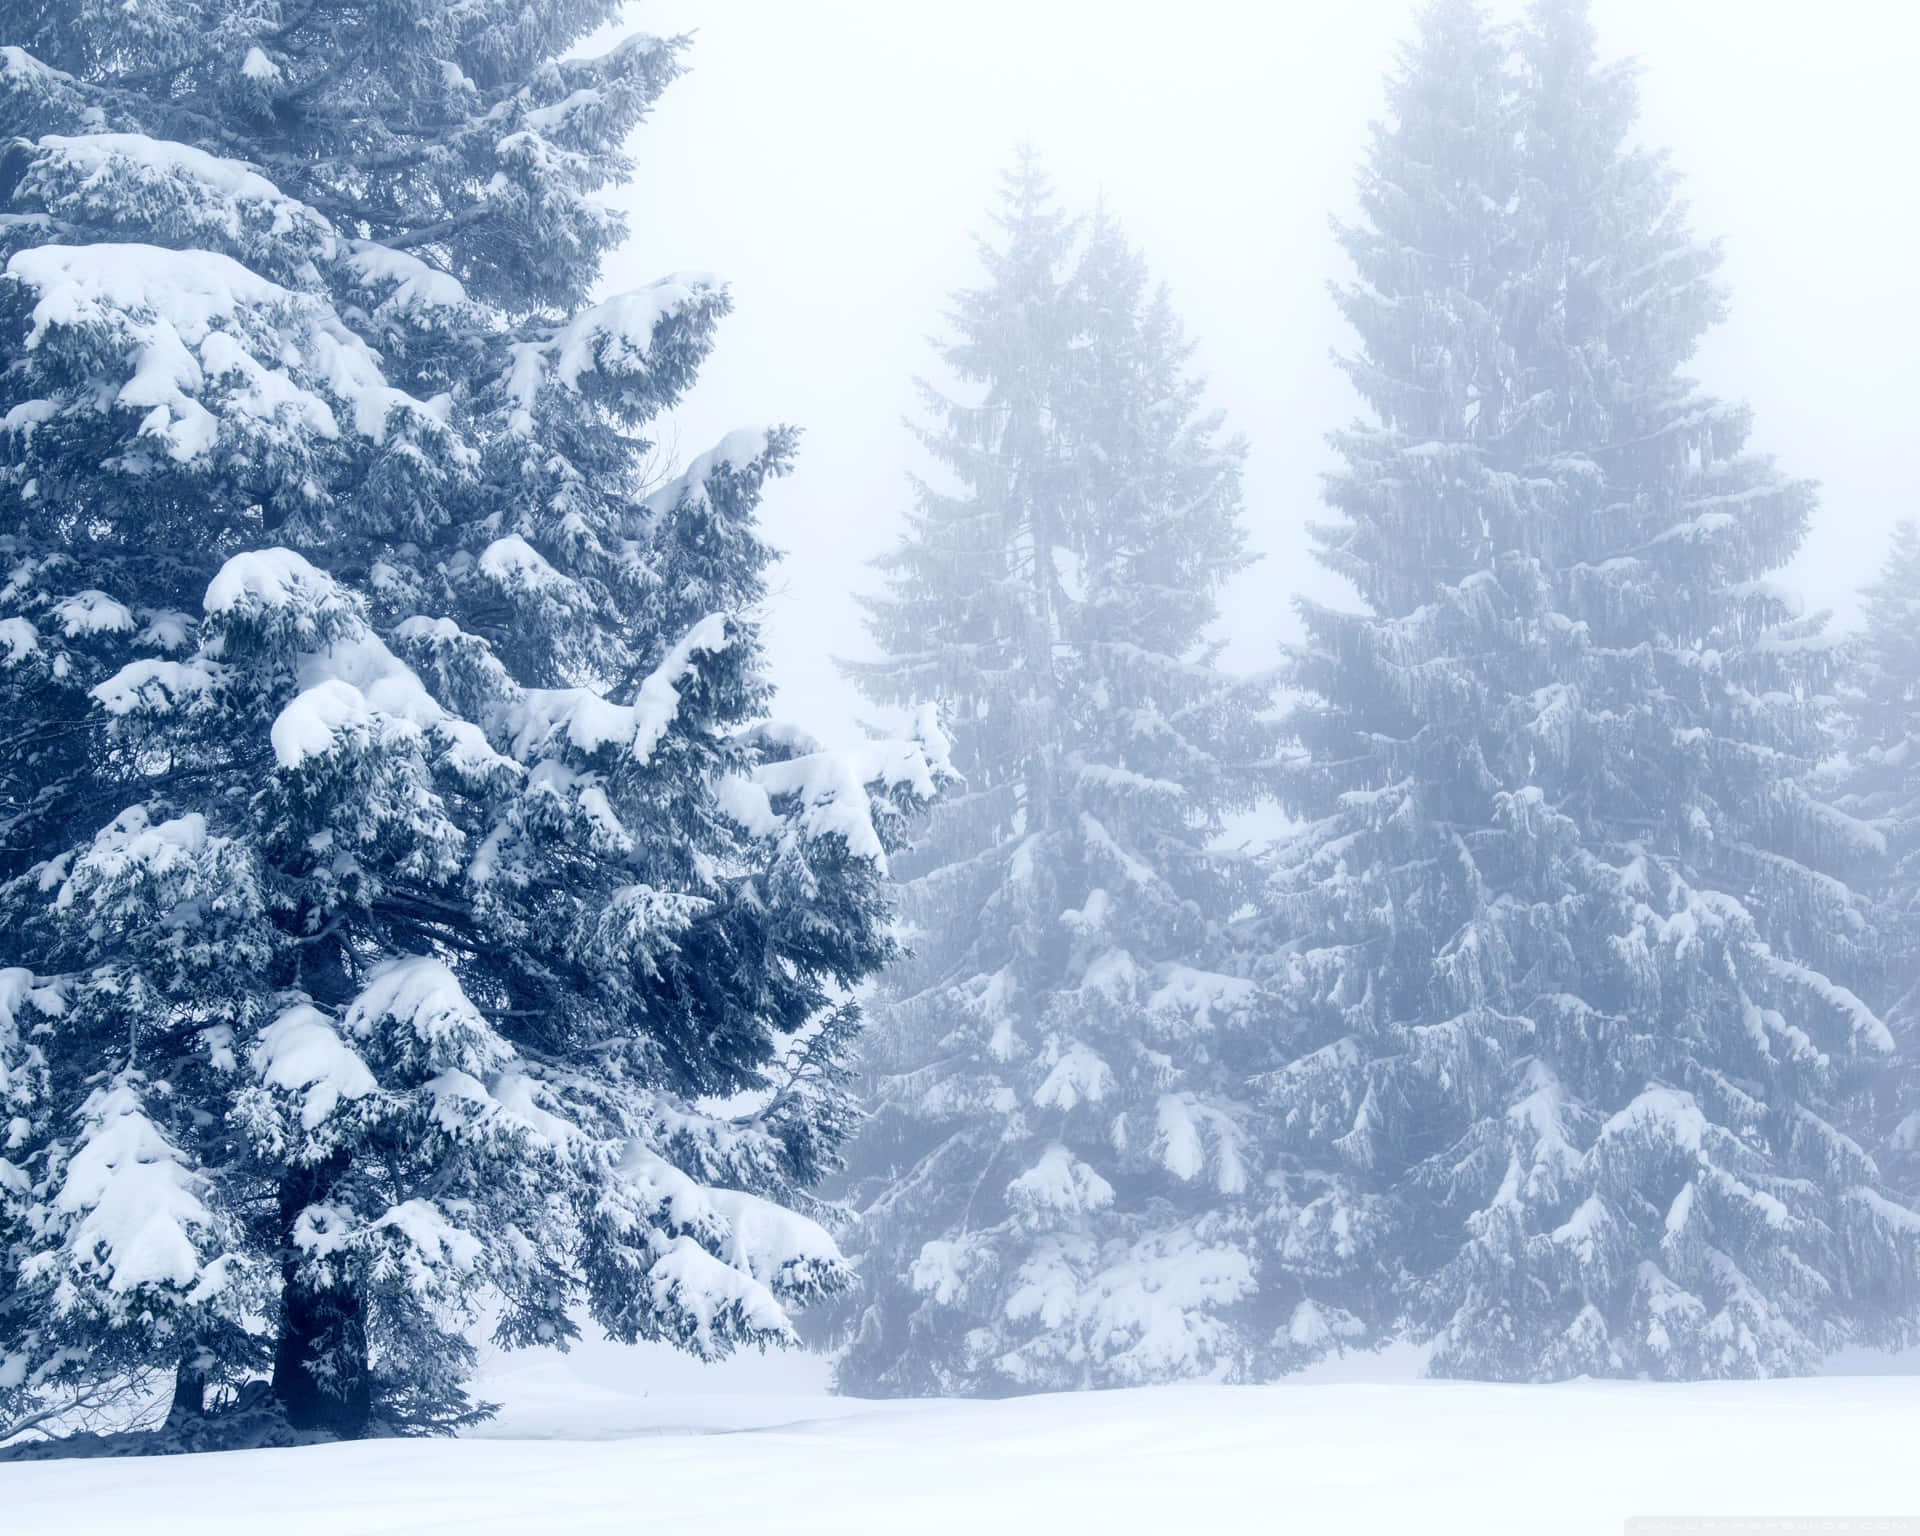 Snowy Landscape in Magical Winter Wonderland Wallpaper